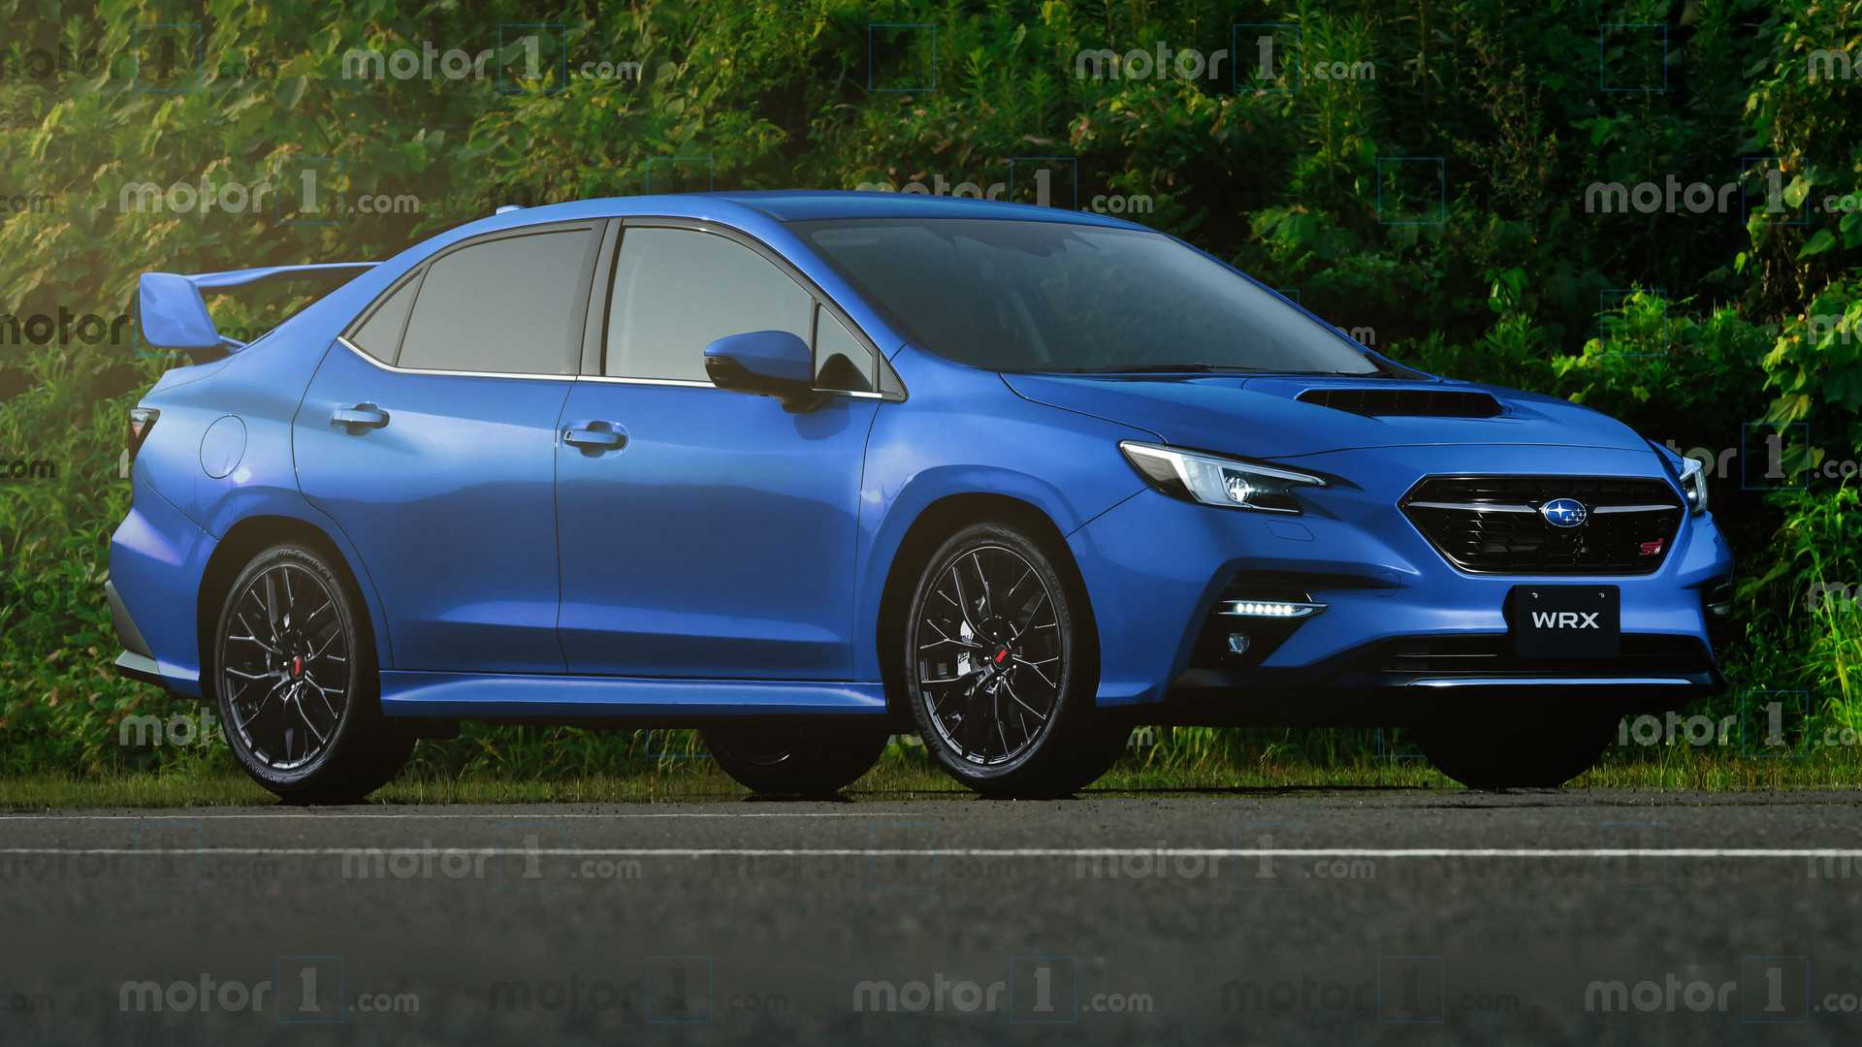 Style 2022 Subaru Wrx Release Date